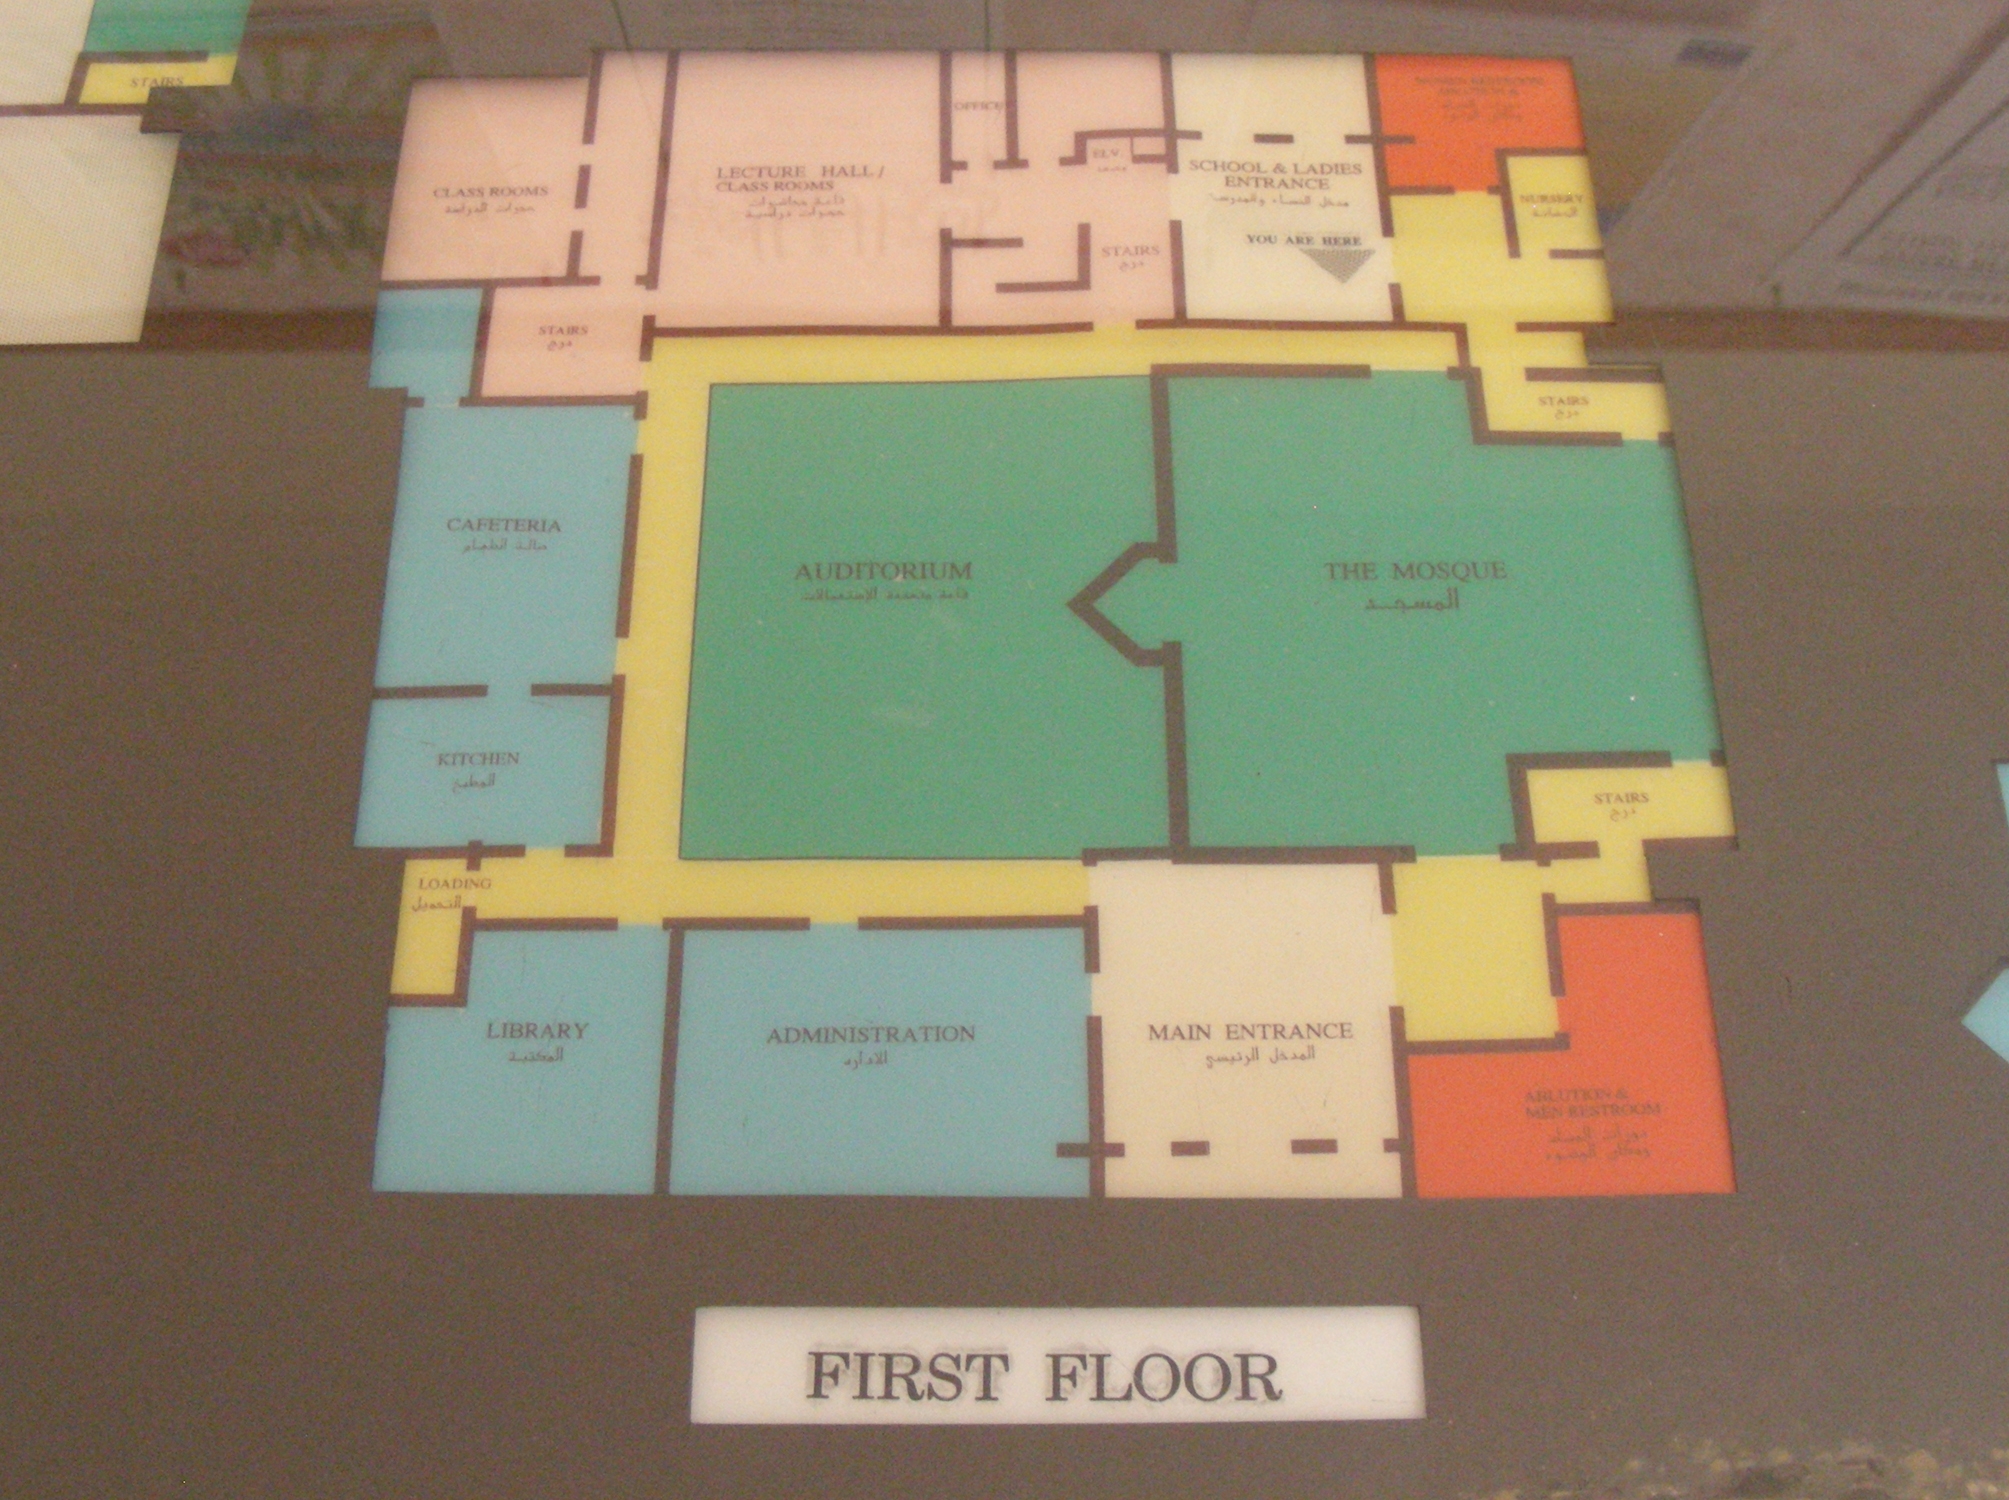 Dar Al-Hijrah Islamic Center - First floor plan, as displayed at Dar Al-Hijrah